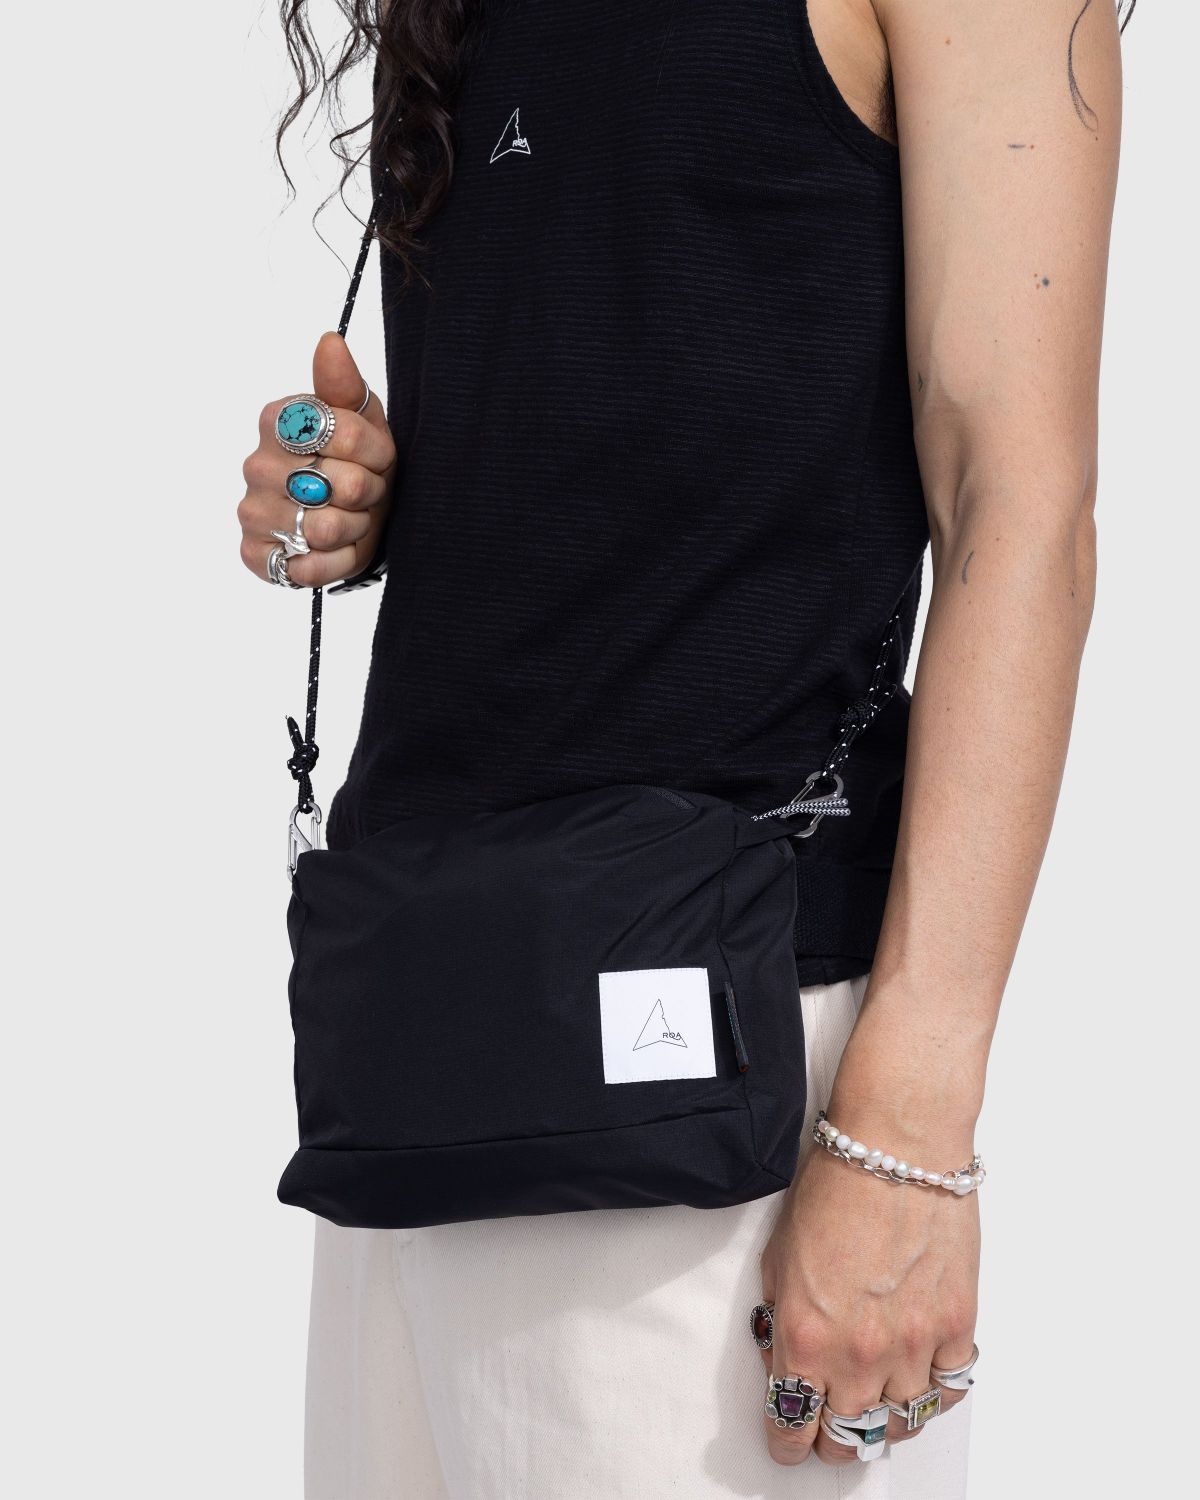 Brand}} – Waterproof Crossbody Bag Black | Highsnobiety Shop